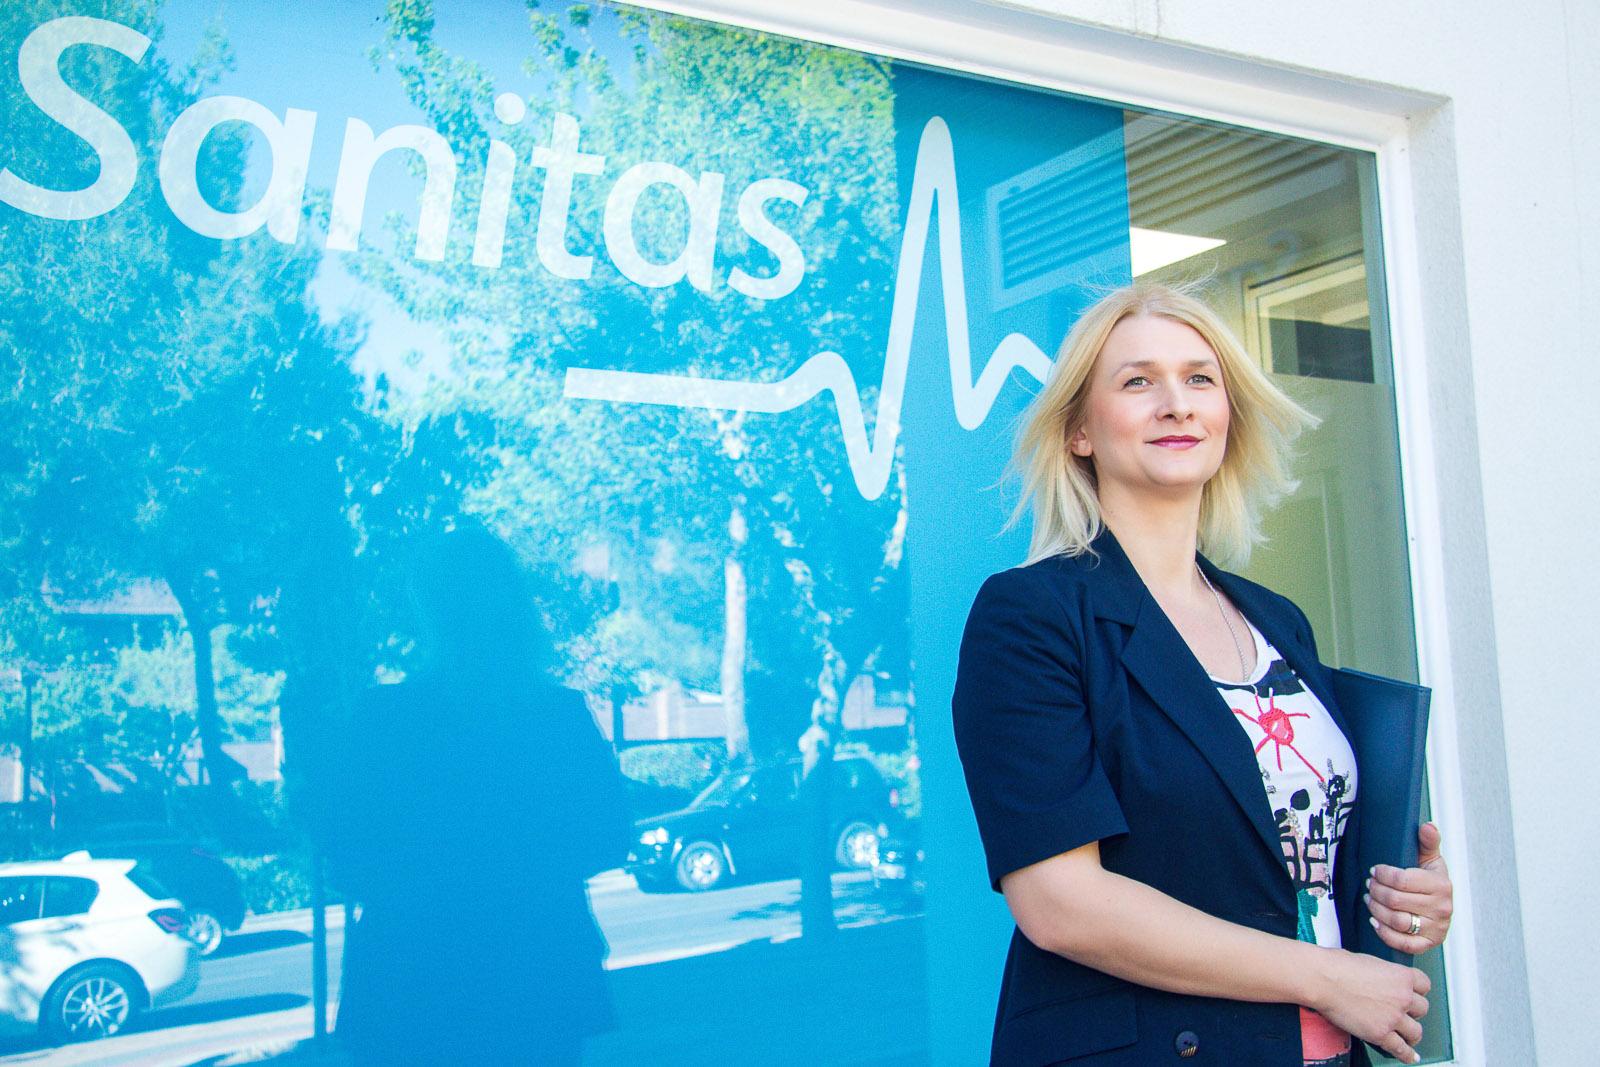 Sanitas health insurance throughout Spain. Sanitas insurance for residence permit, students,